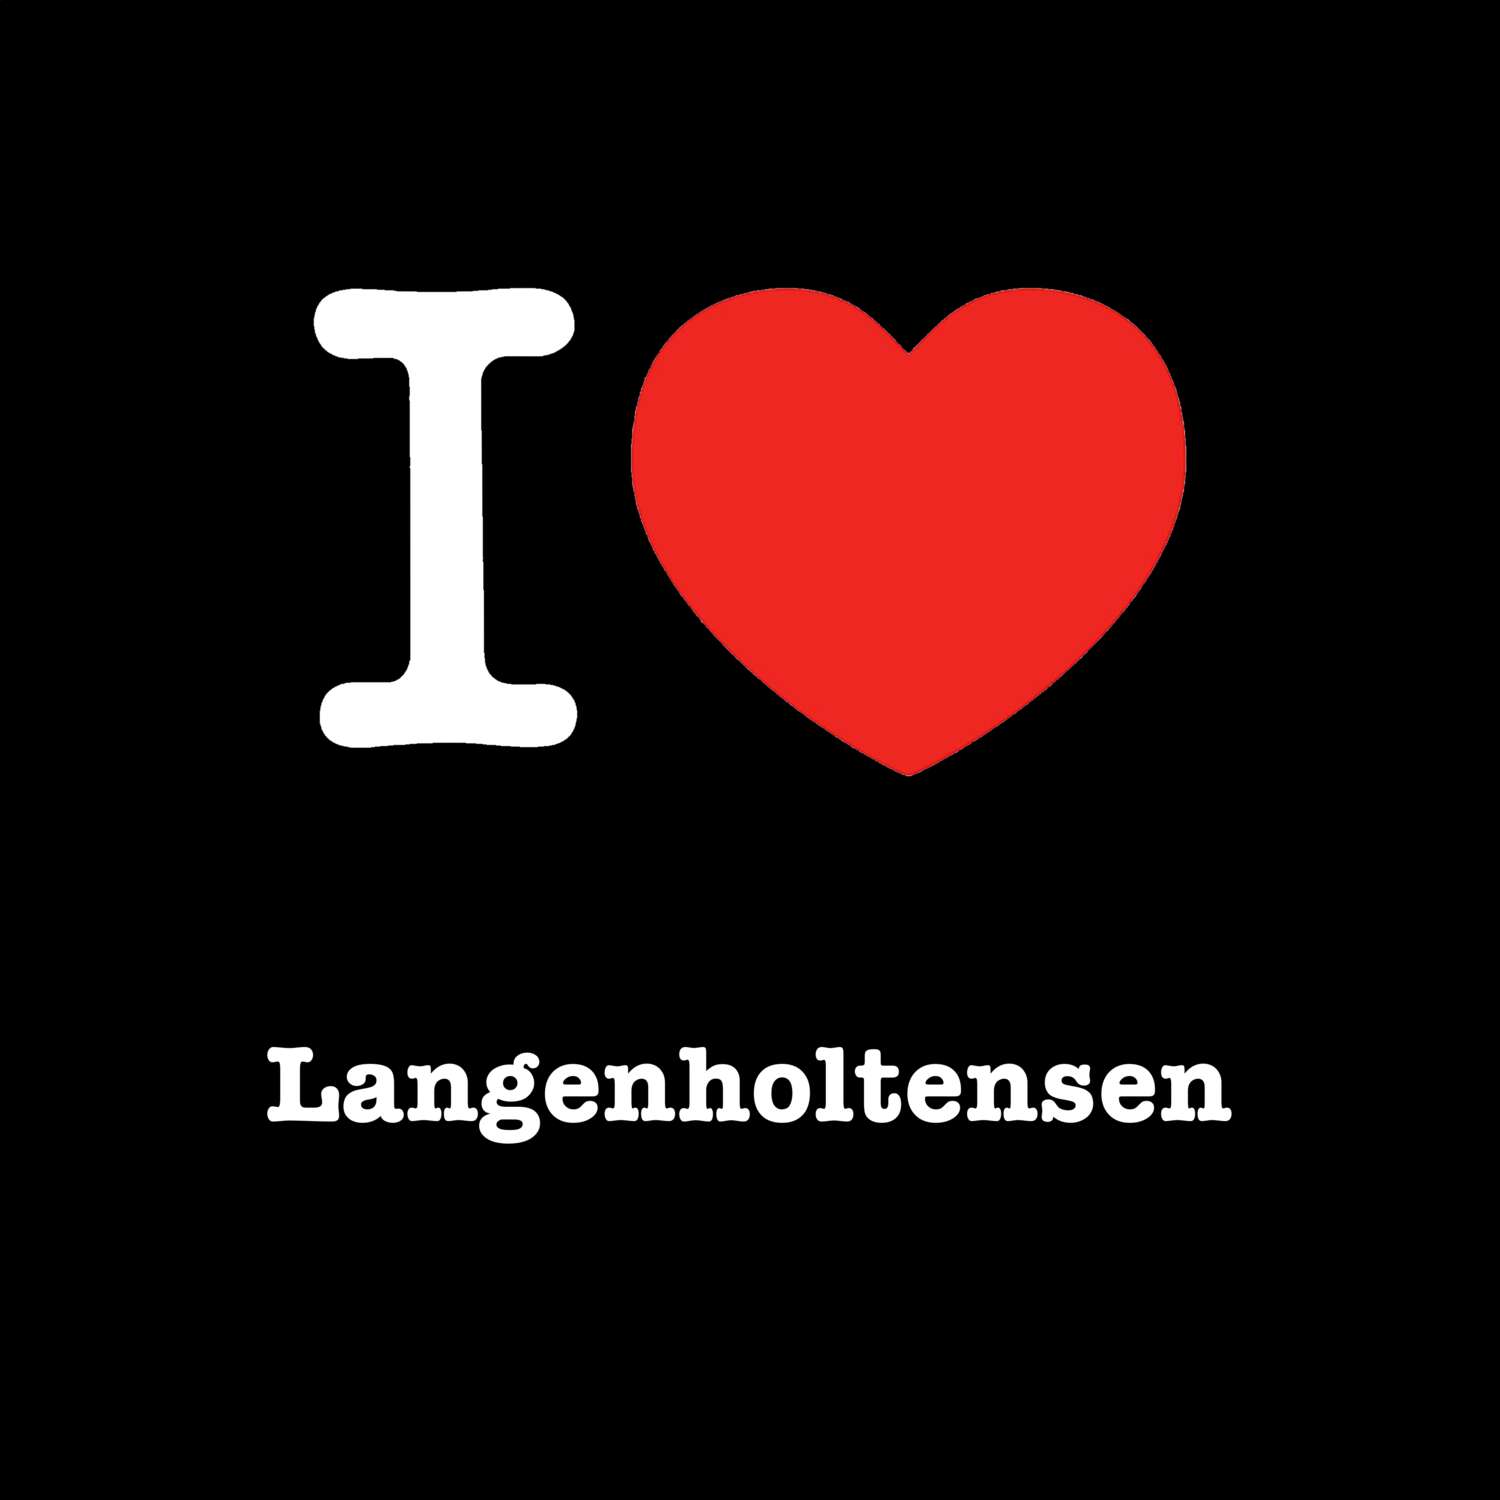 Langenholtensen T-Shirt »I love«